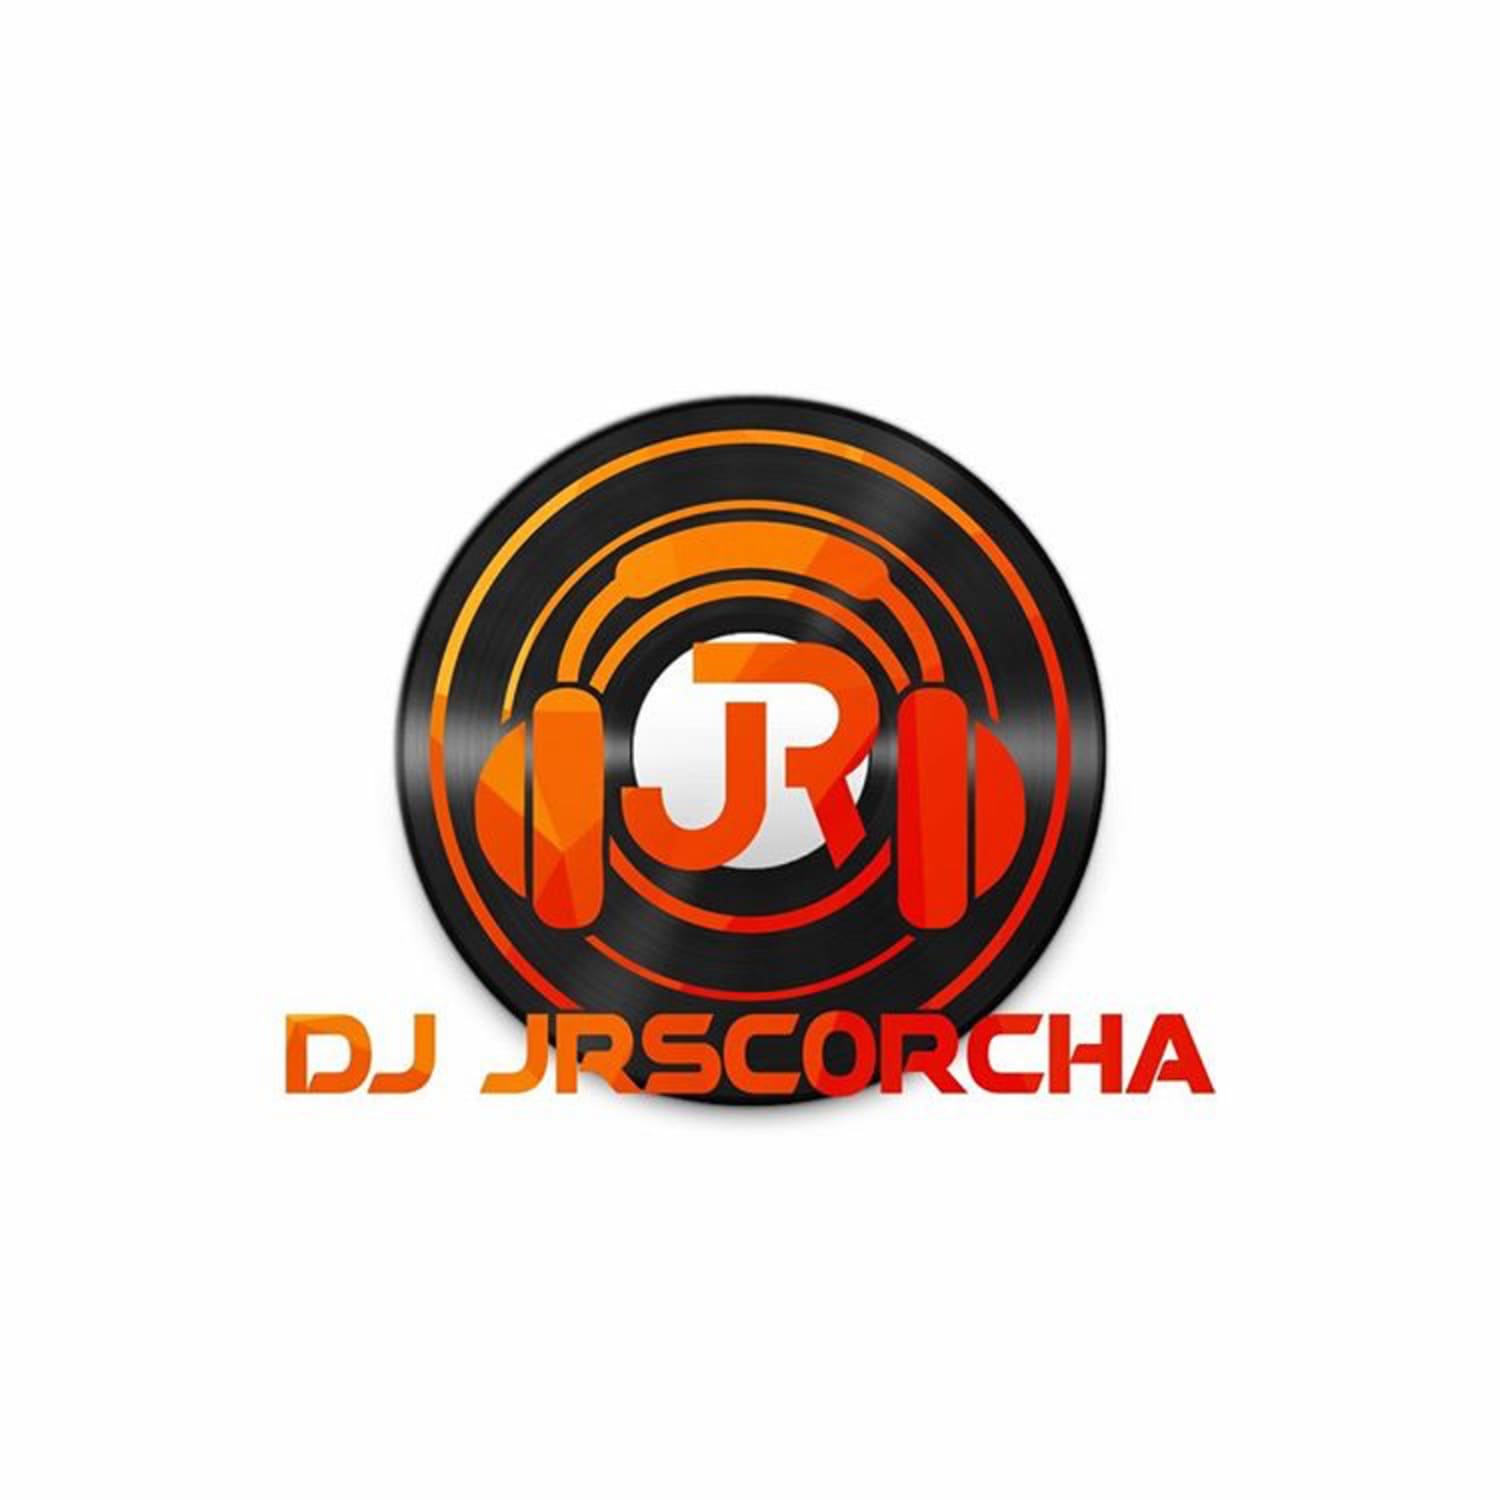 DJ Jr. Scorcha